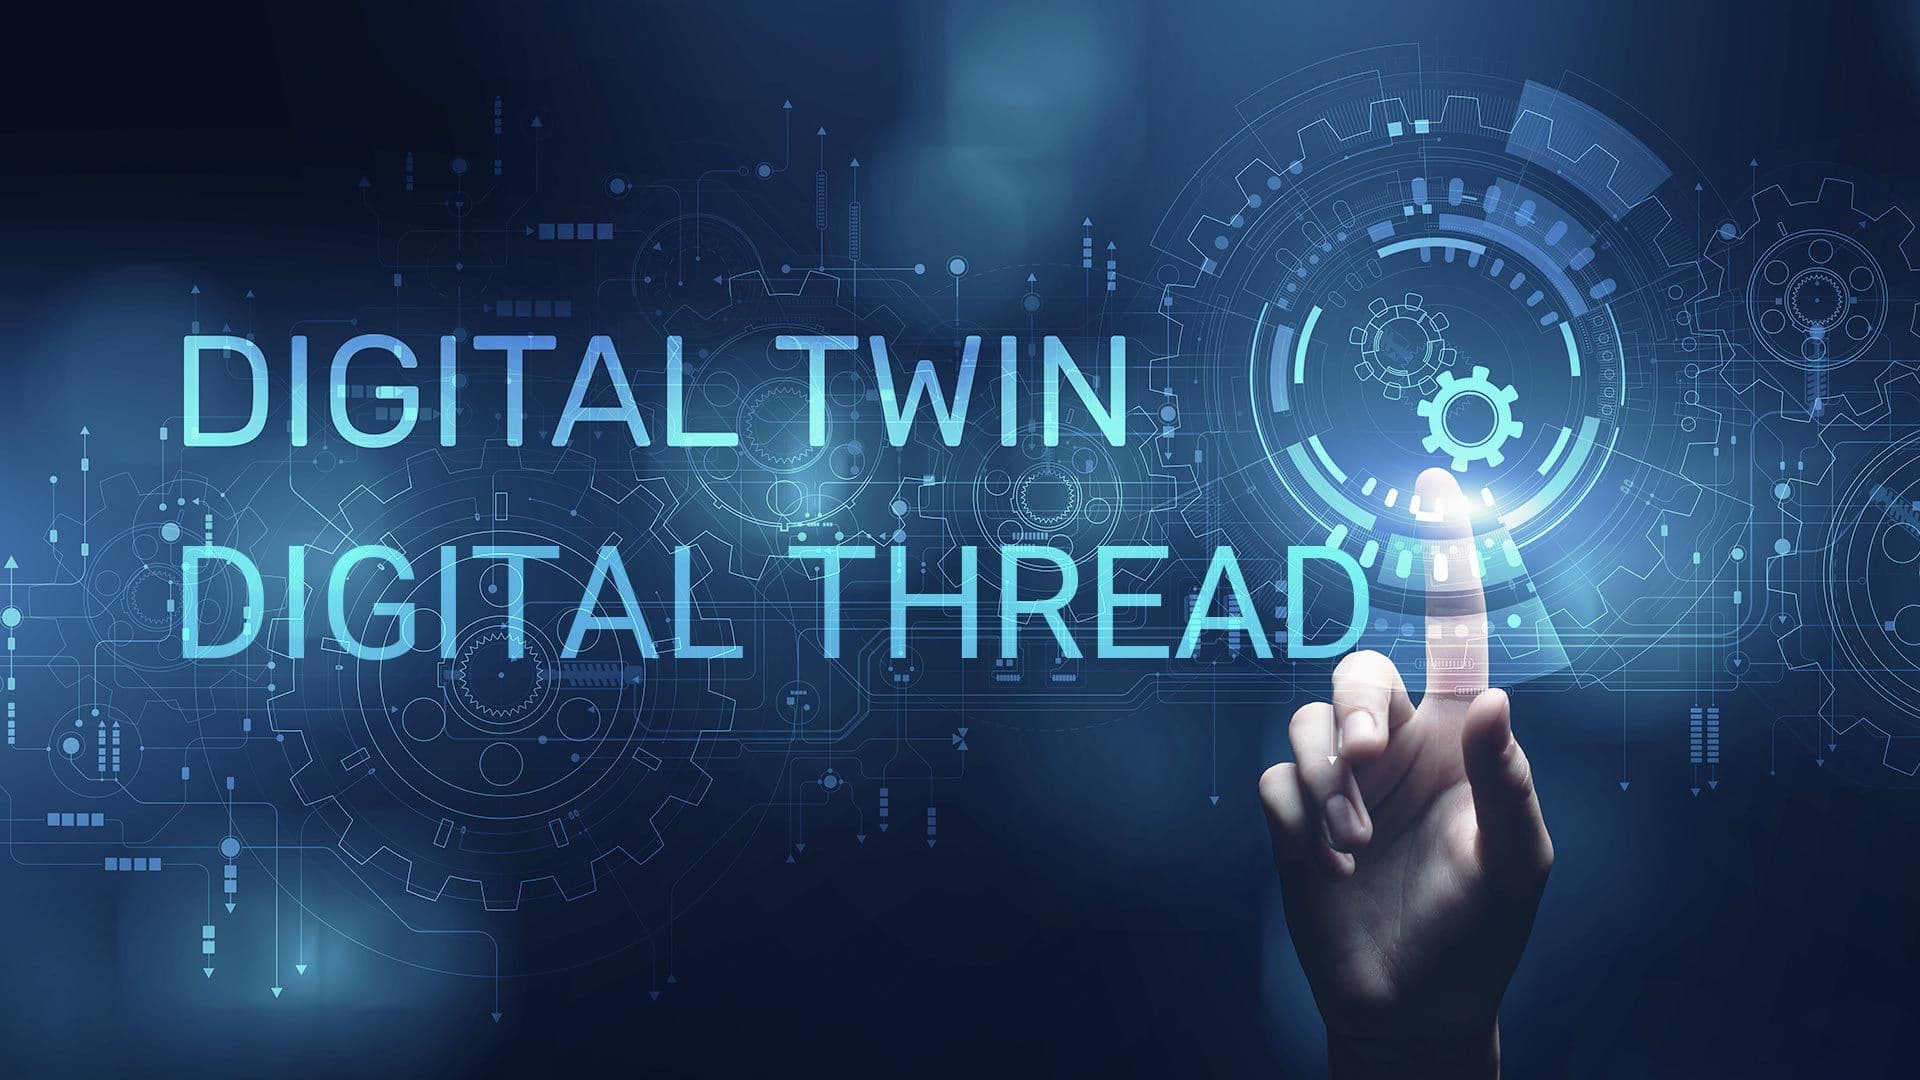 Digital Thread vs. Digital Twin: Which Do You Need Most?